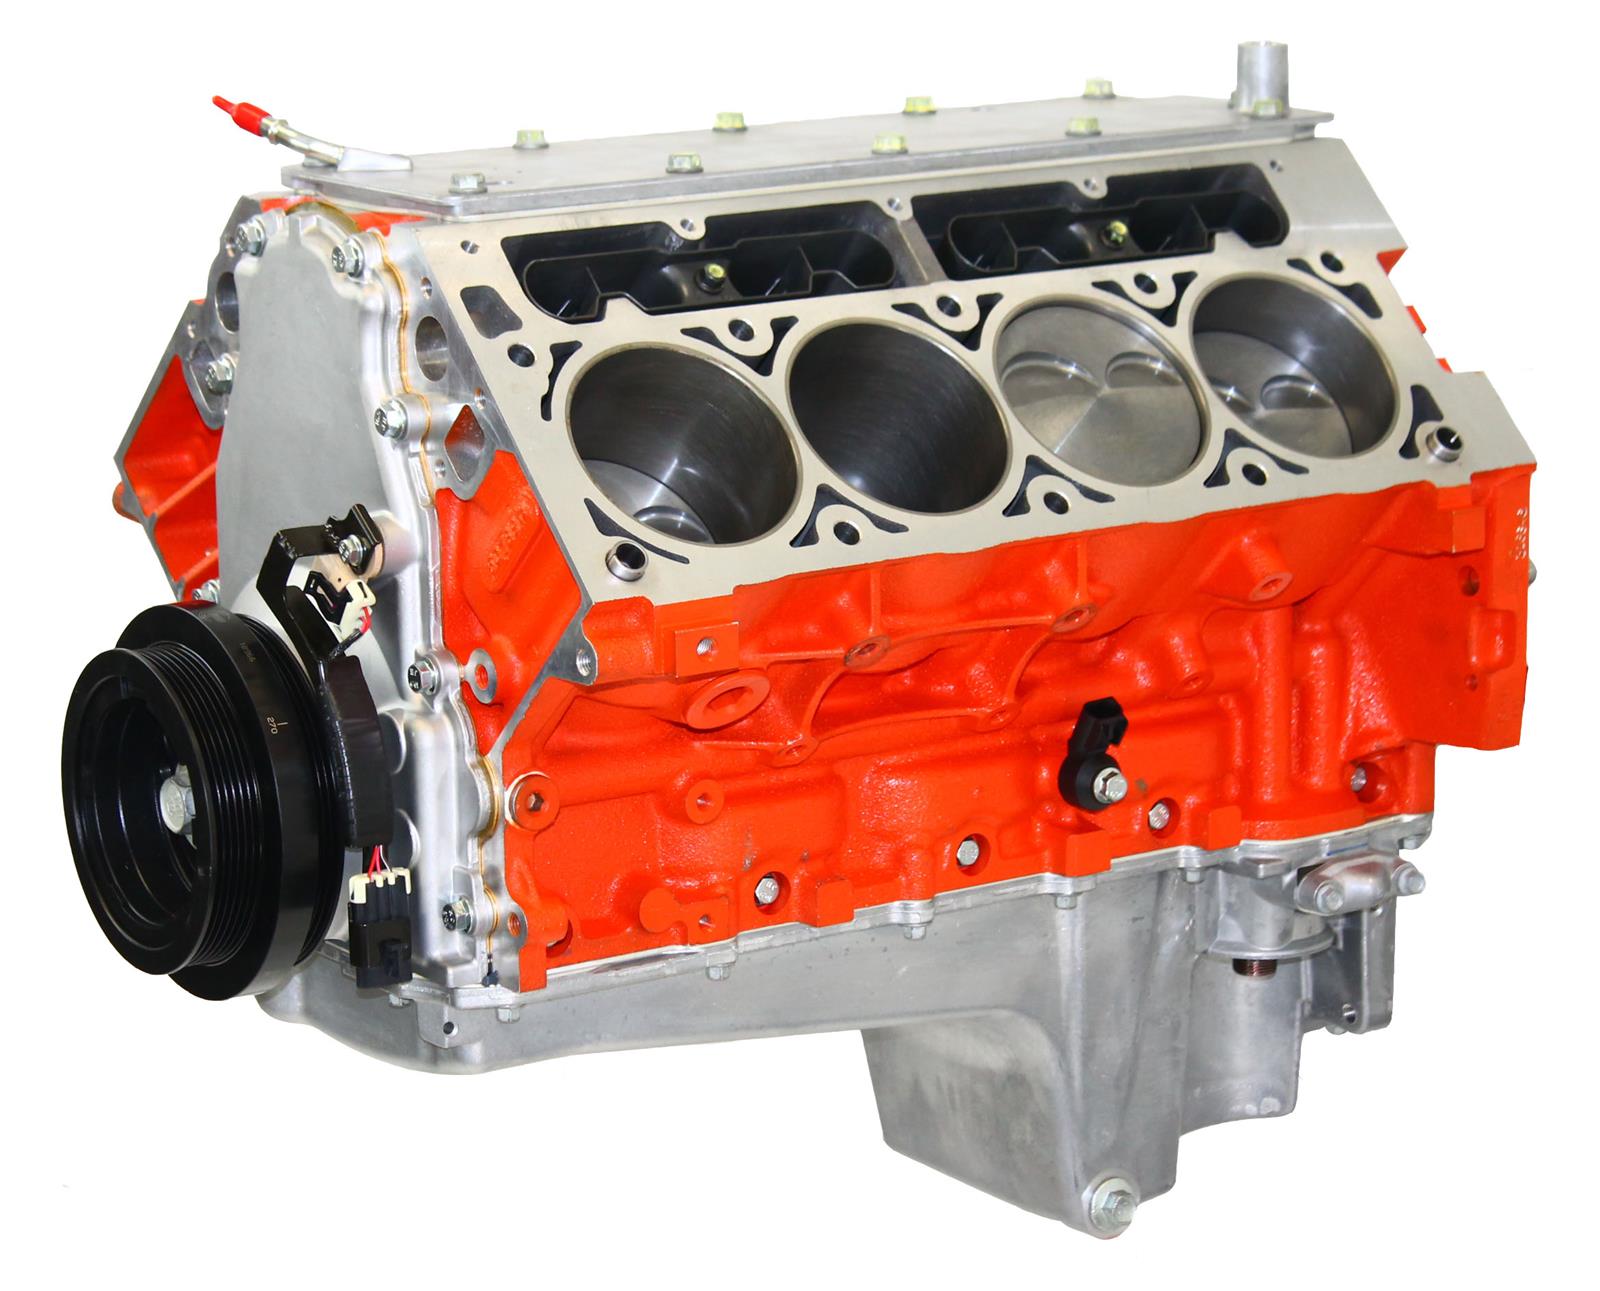 427 blueprint engine